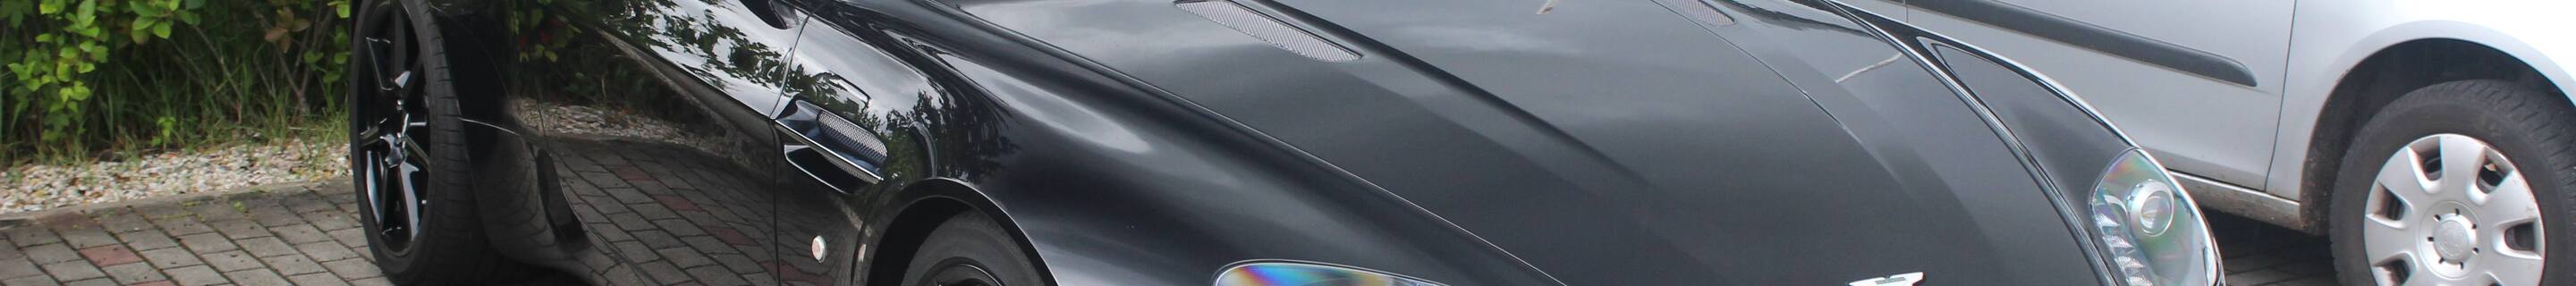 Aston Martin V8 Vantage Roadster 2012